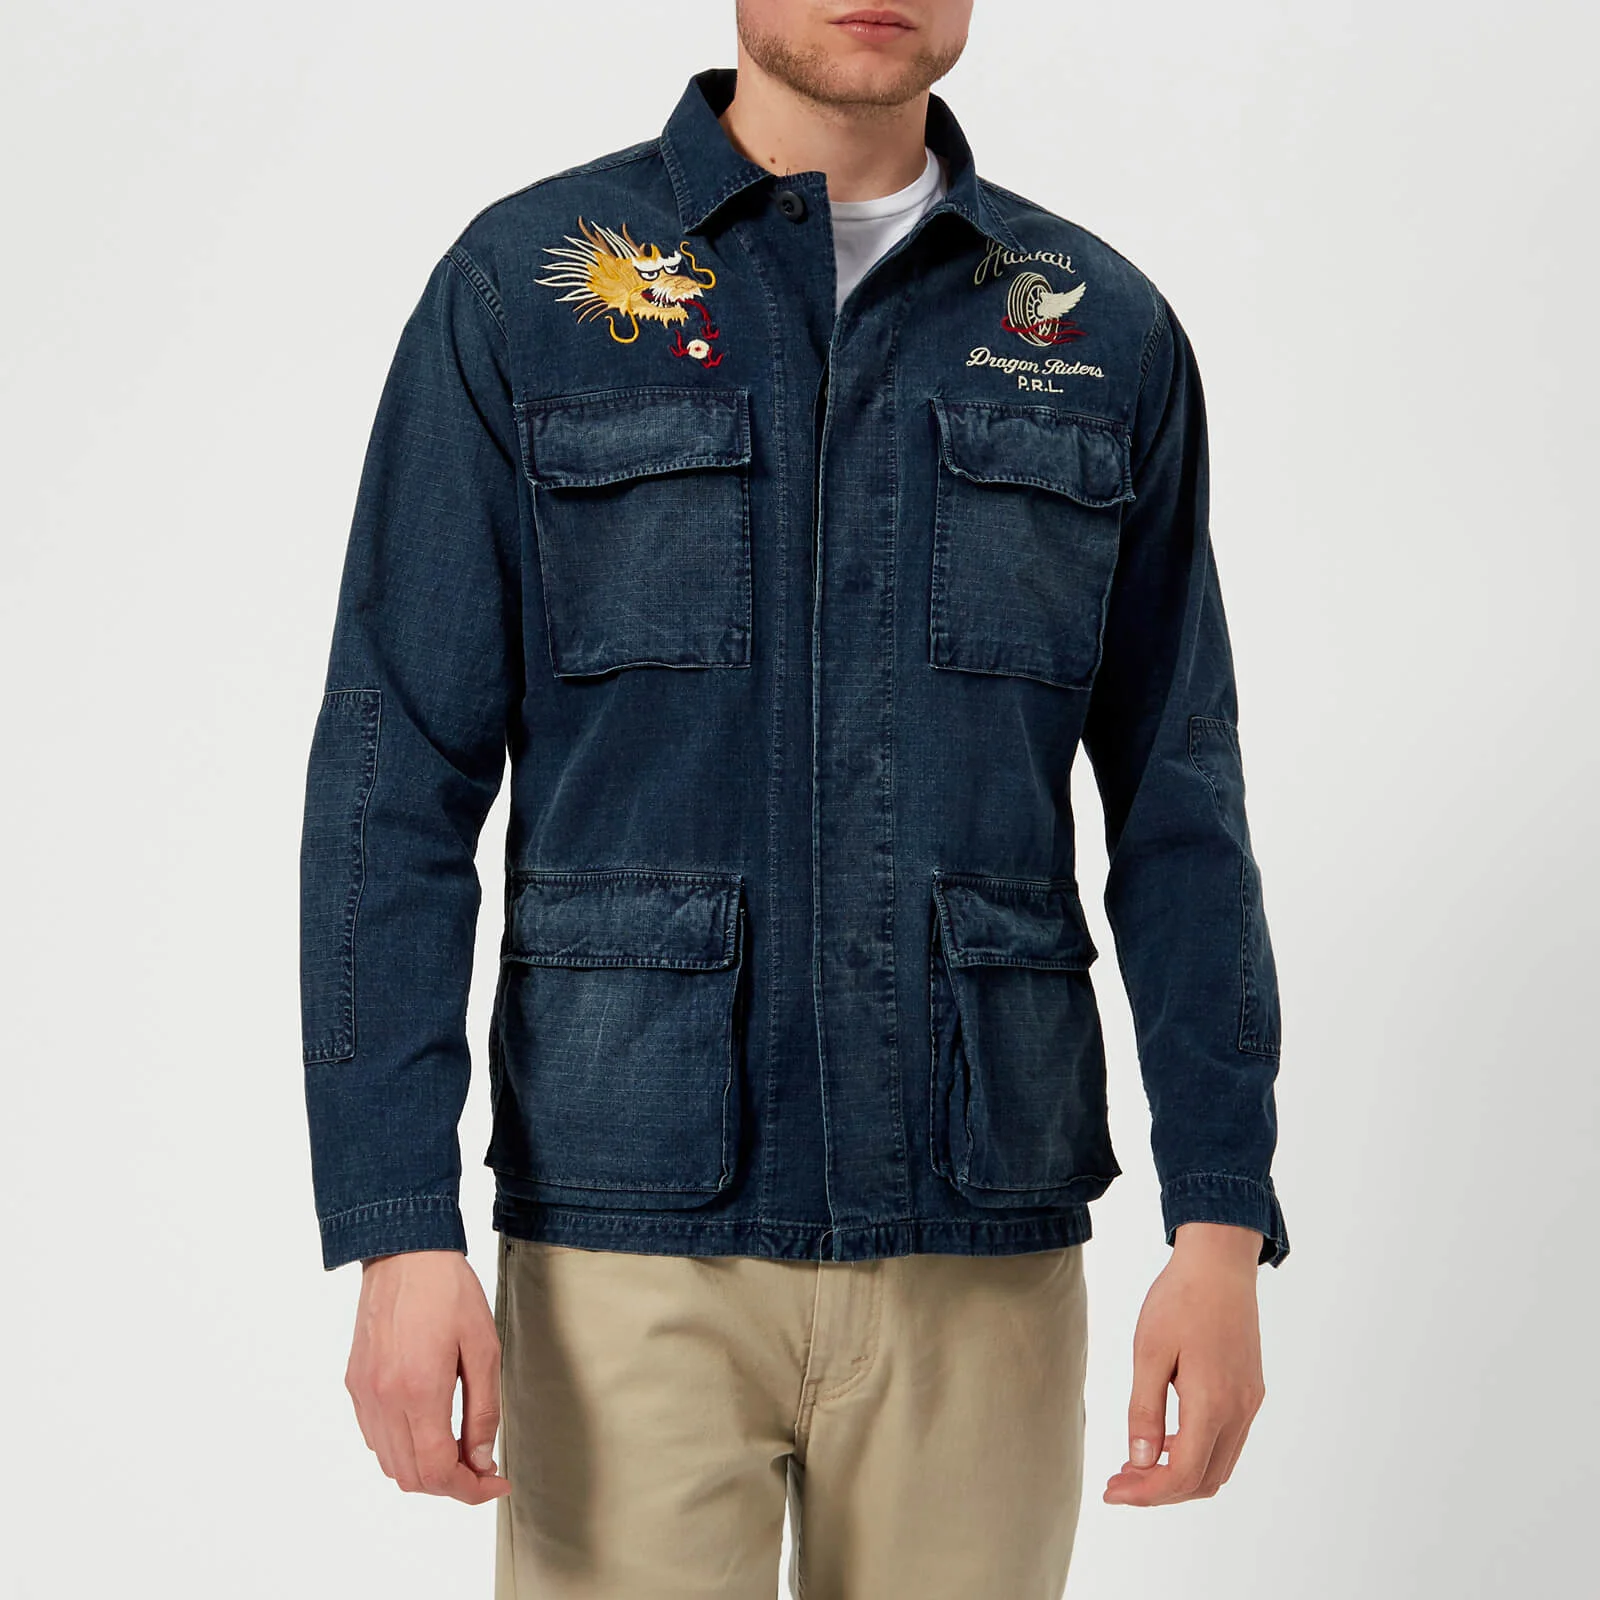 Polo Ralph Lauren Men's Airborne Overshirt - Indigo Image 1